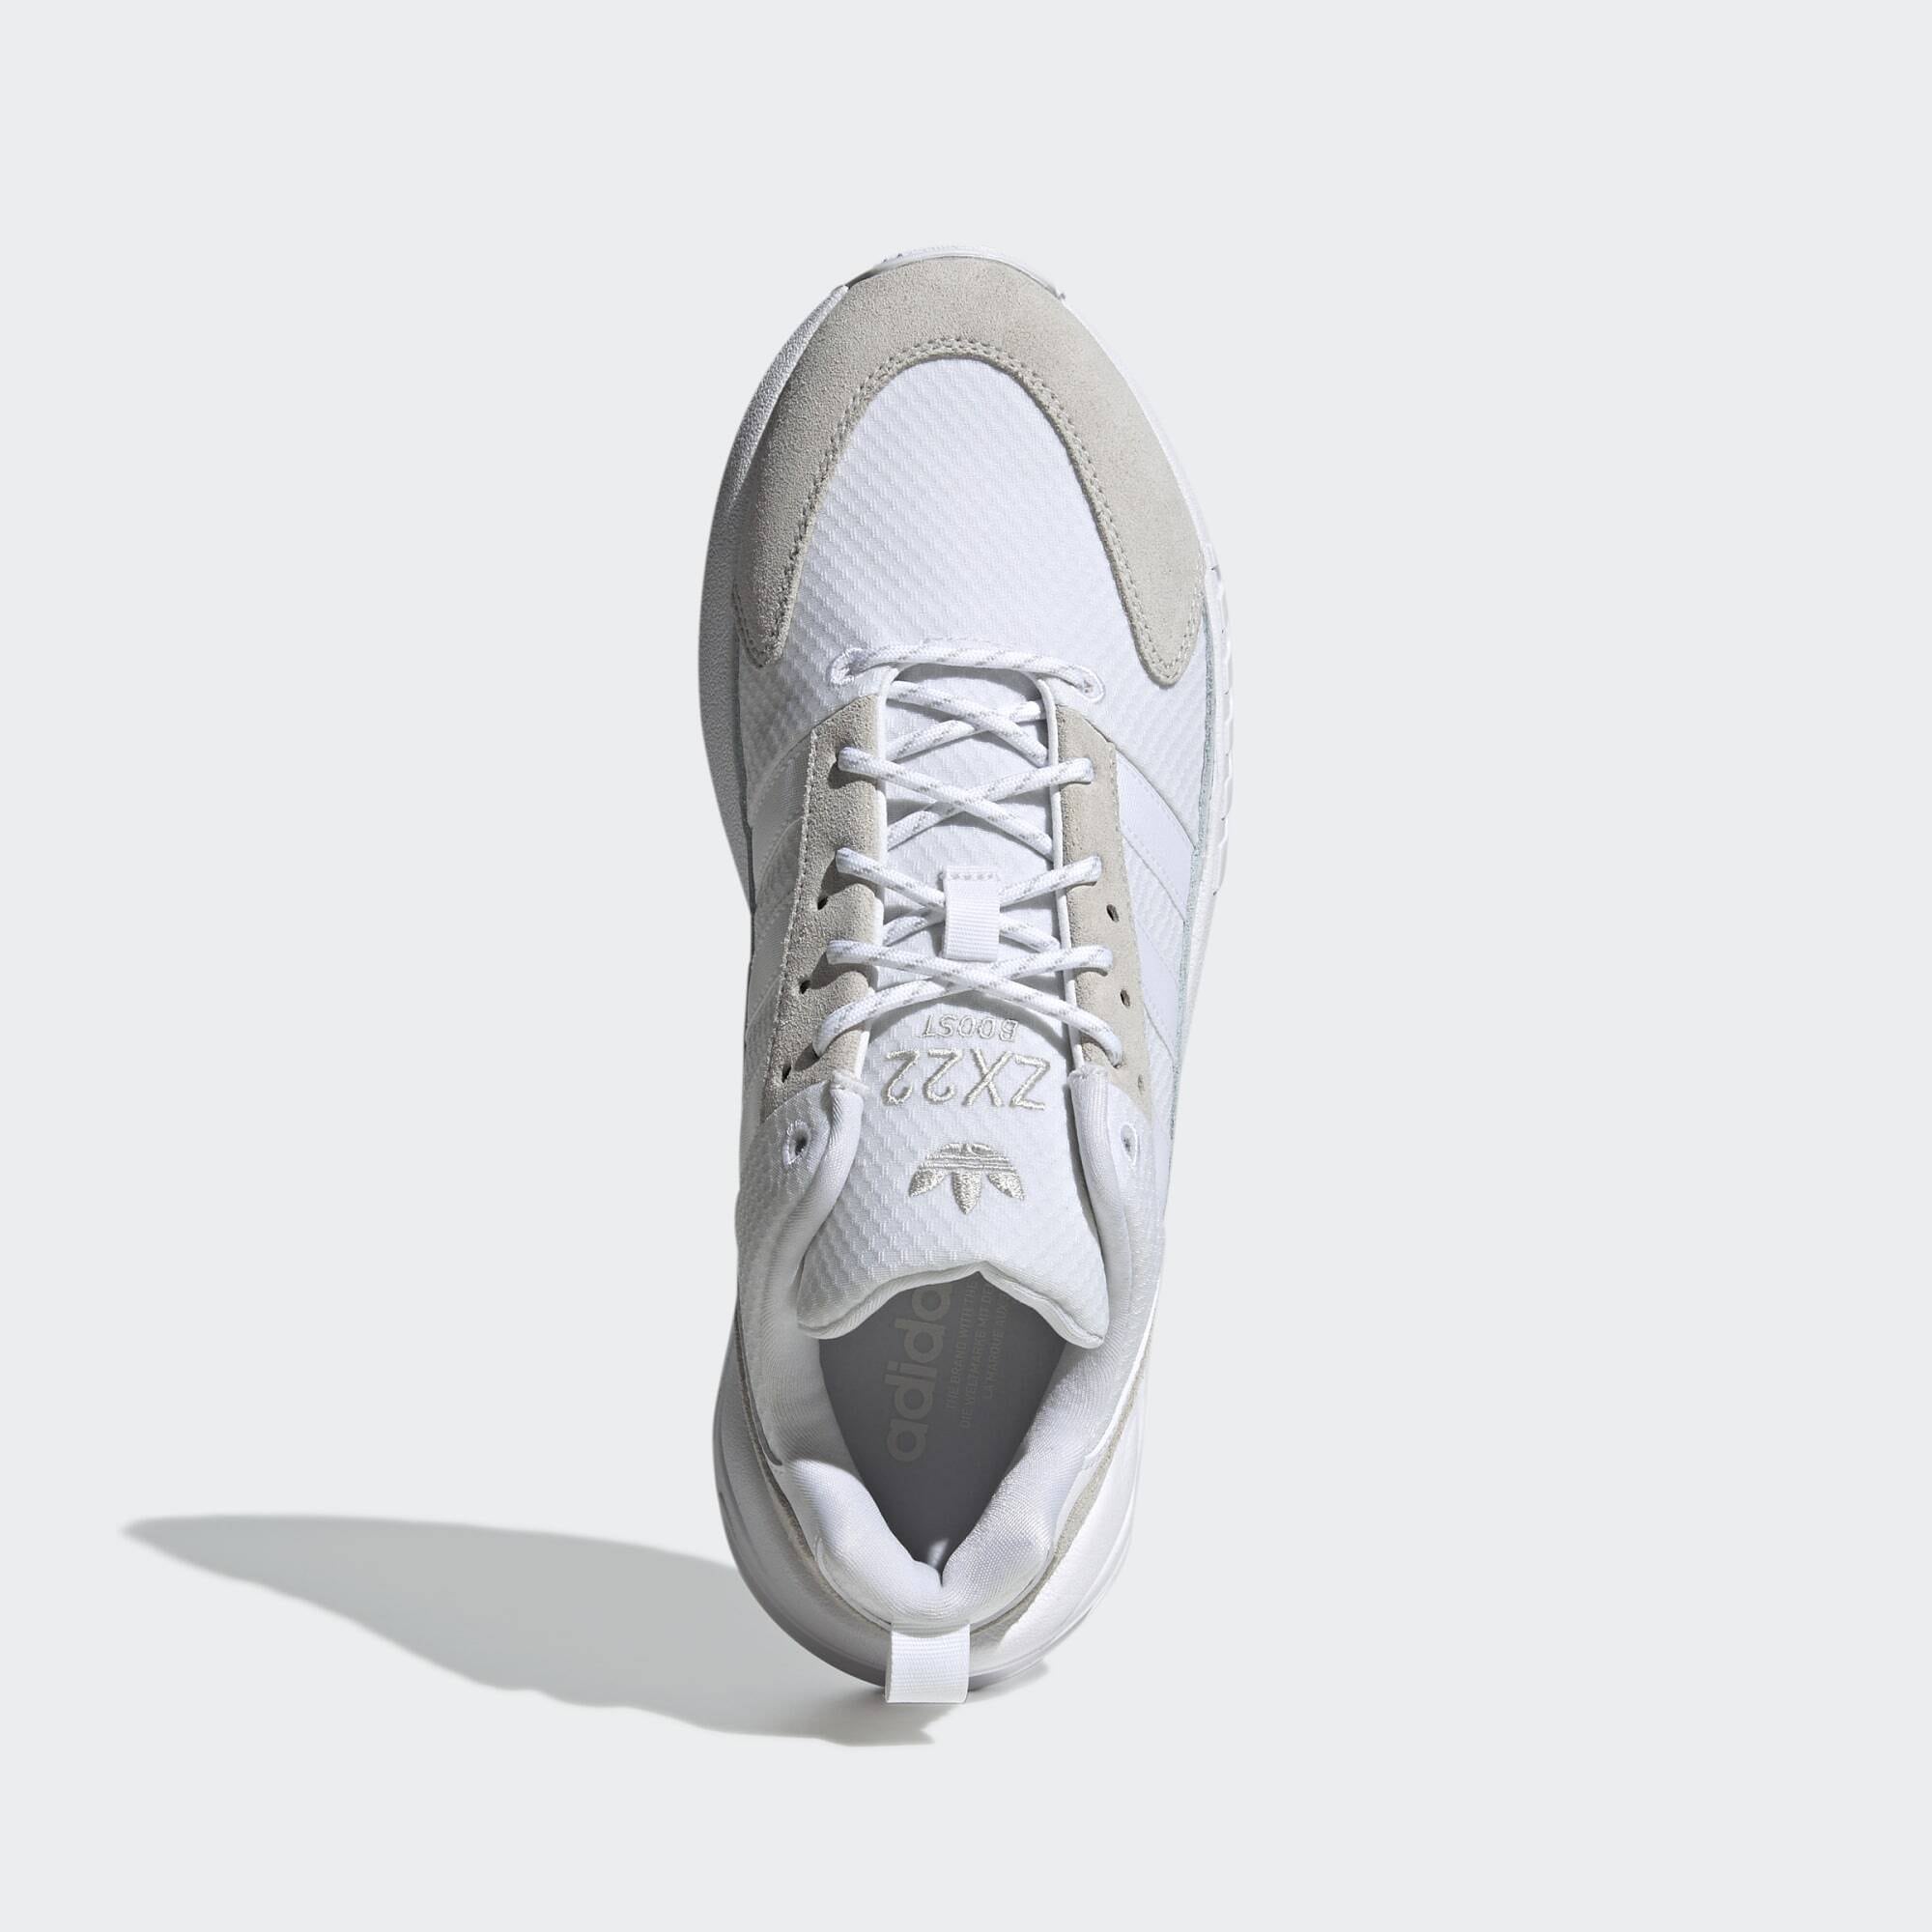 adidas Originals ZX 22 Boost - Bianco/Cystal Bianco - Mens Shoes 